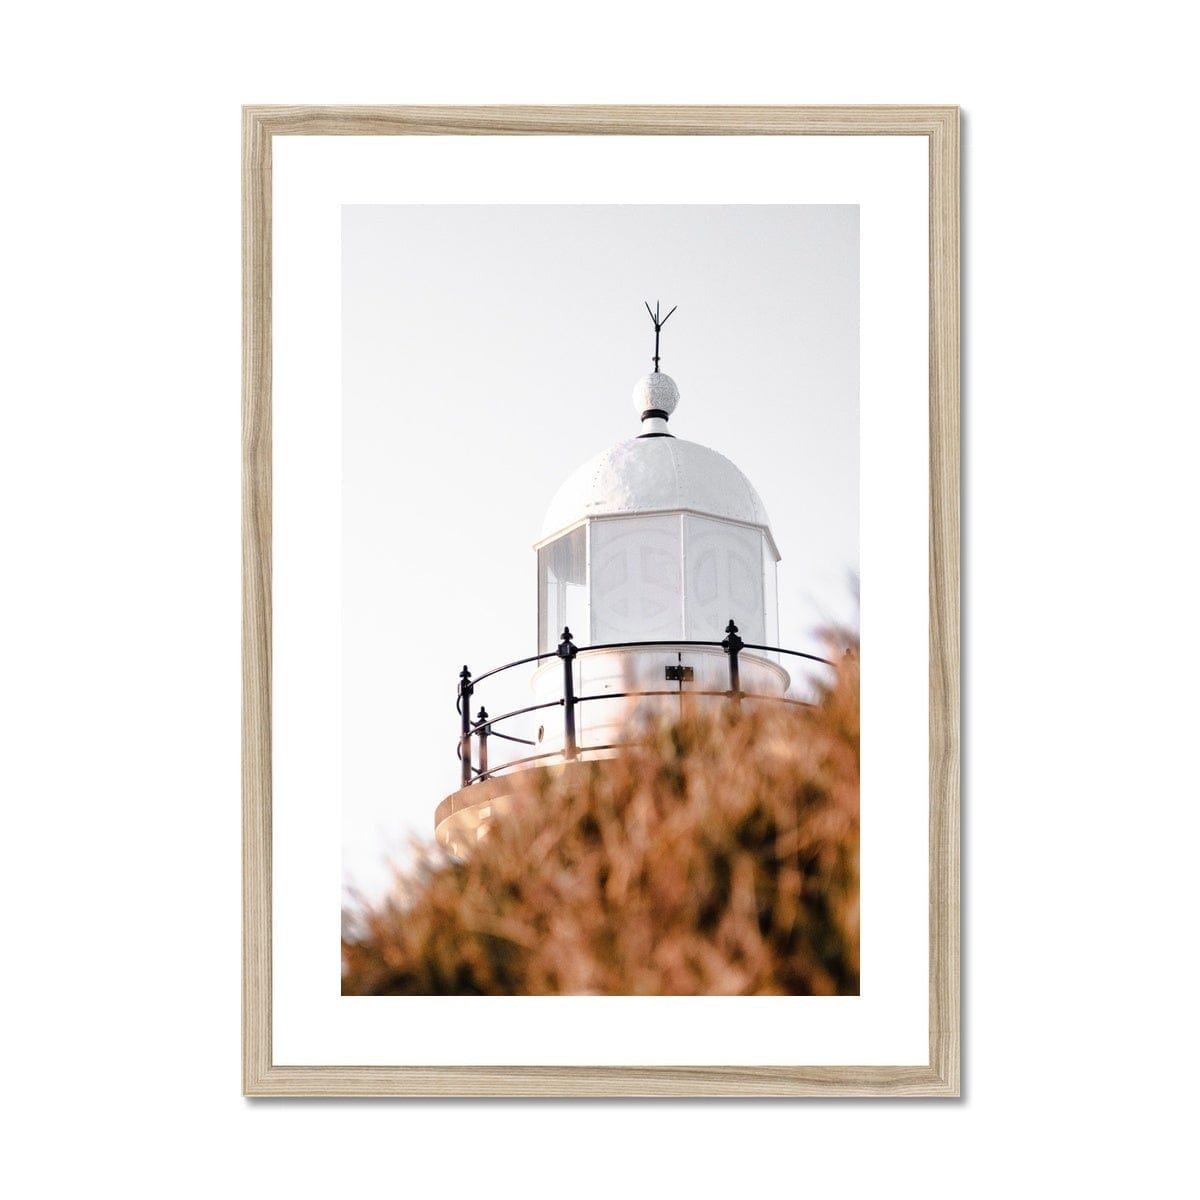 Adam Davies Framed A4 Portrait / Natural Frame Tacking Point Lighthouse Port Macquarie Framed Print